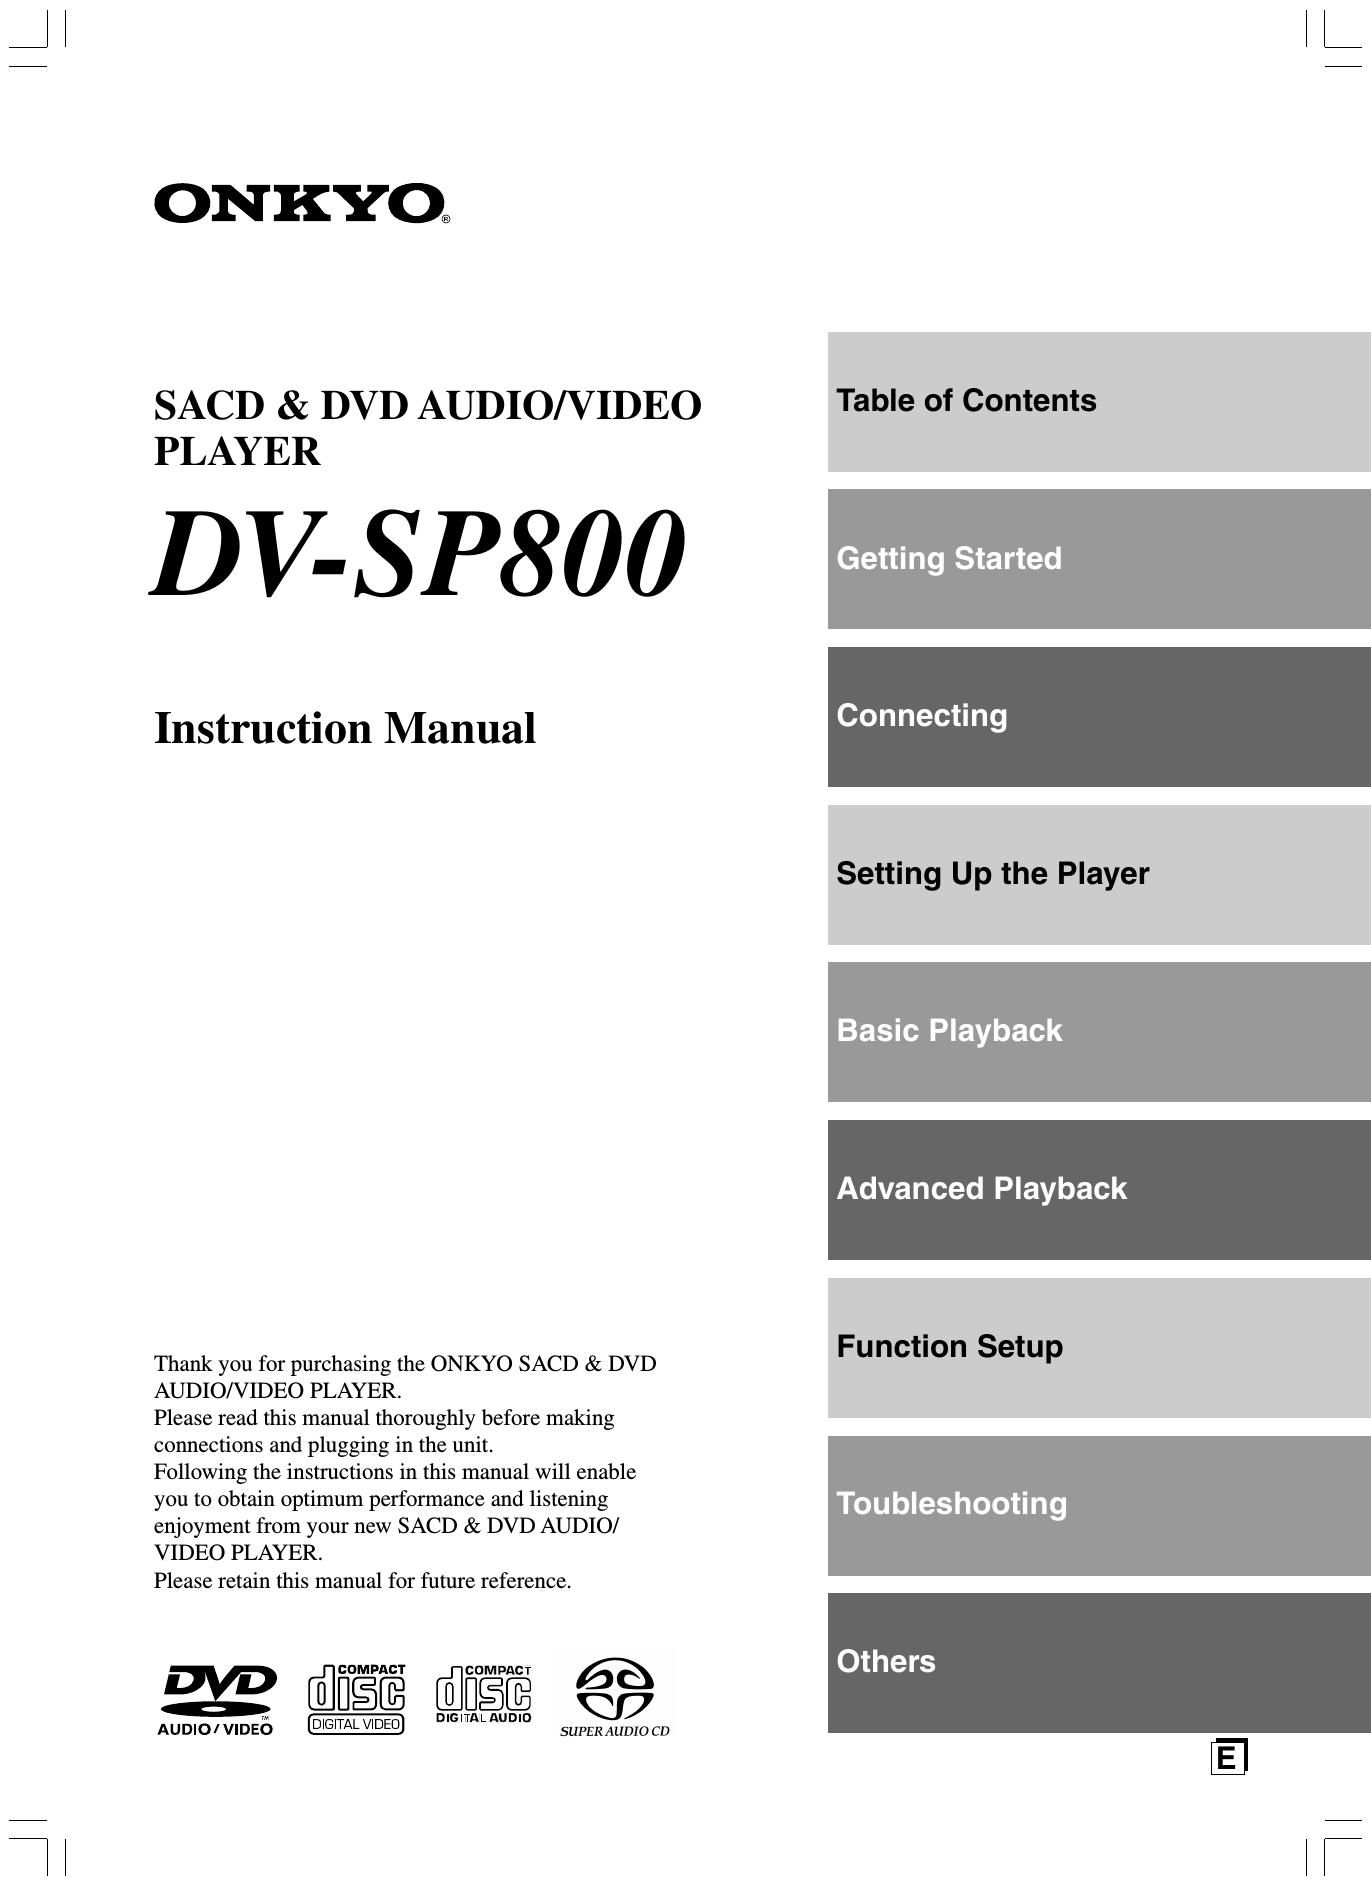 Onkyo DVSP 800 Owners Manual 2